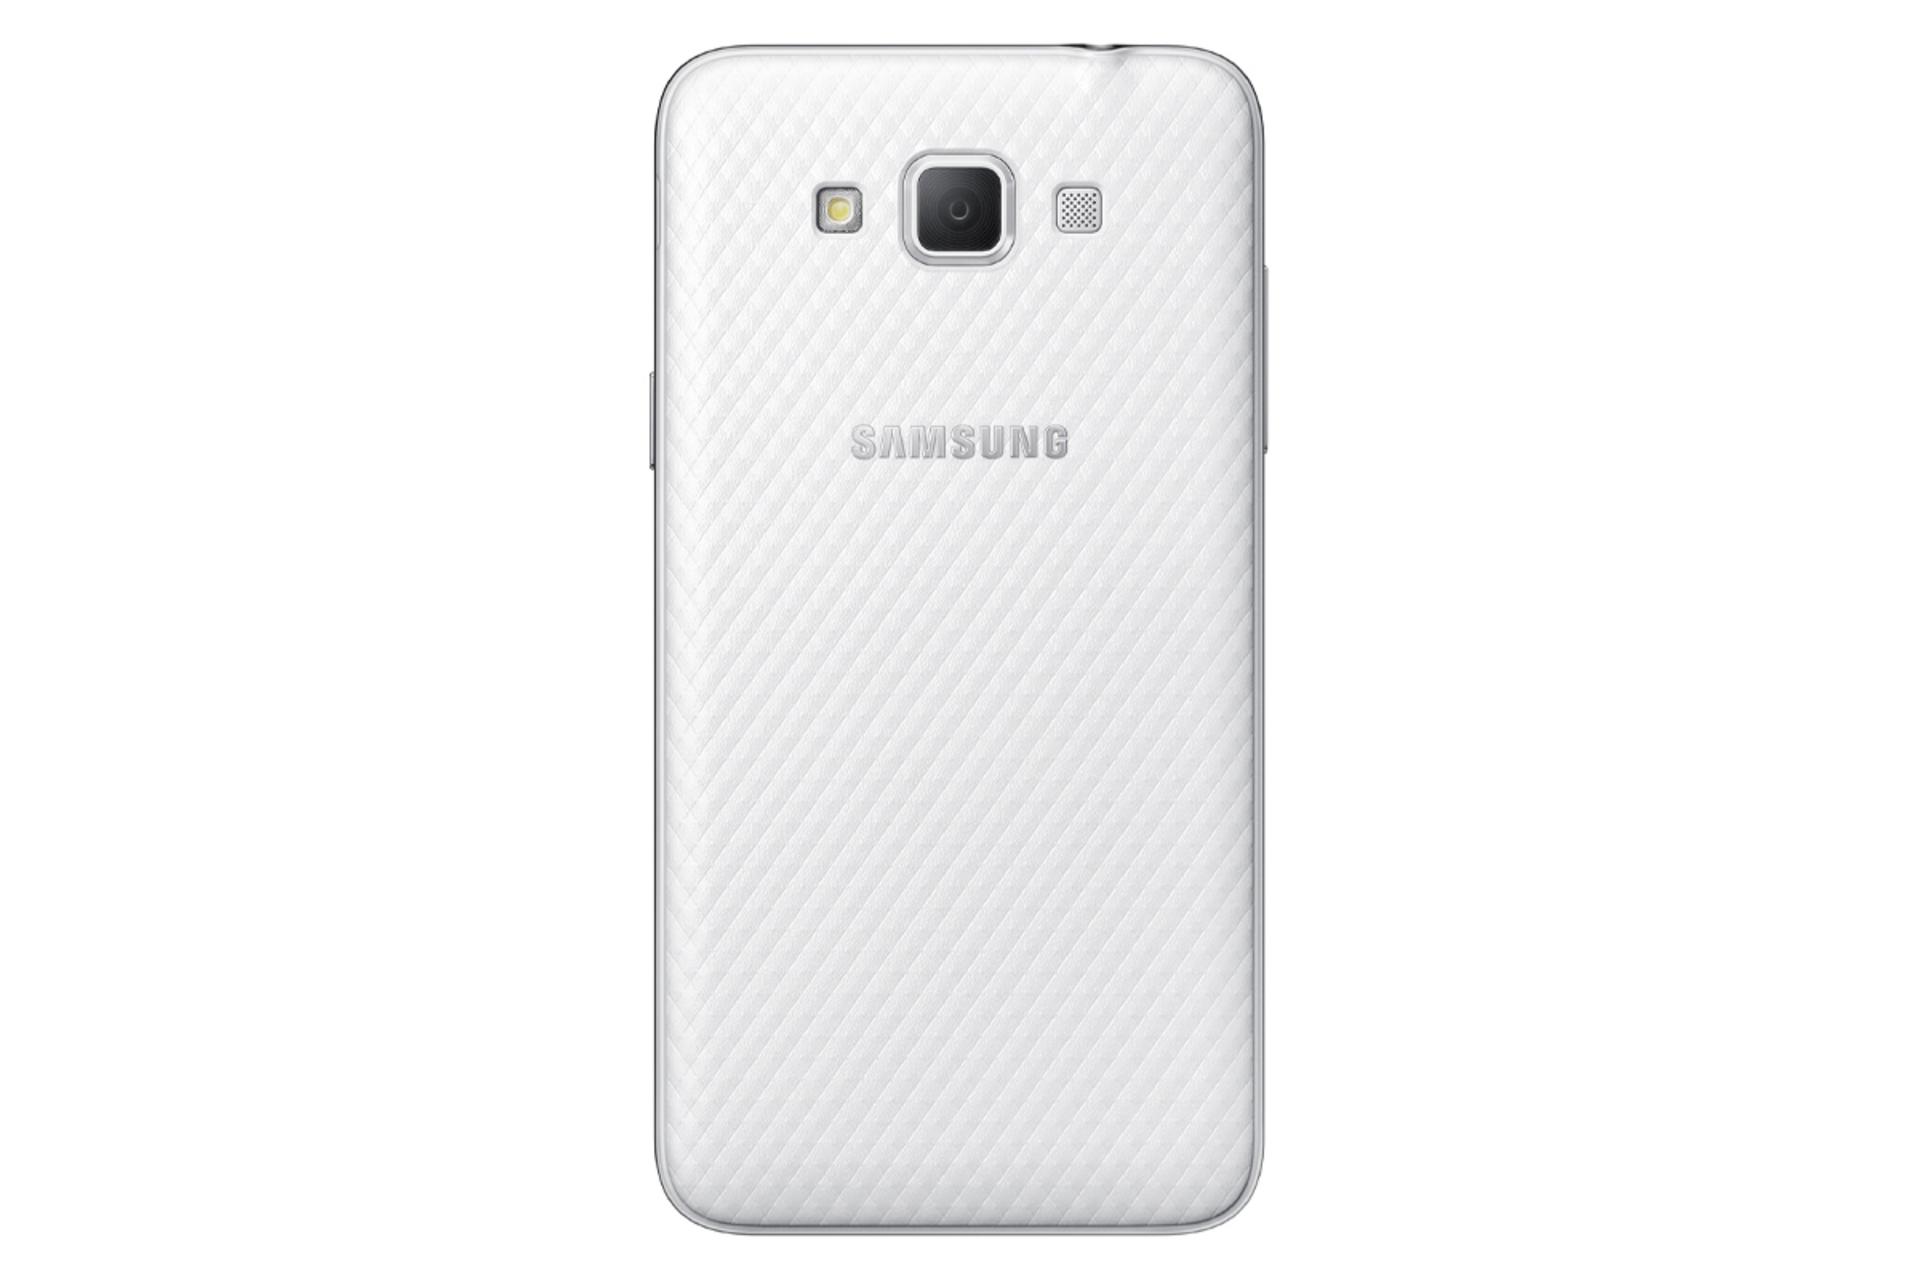 دوربین گلکسی گرند مکس سامسونگ Samsung Galaxy Grand Max